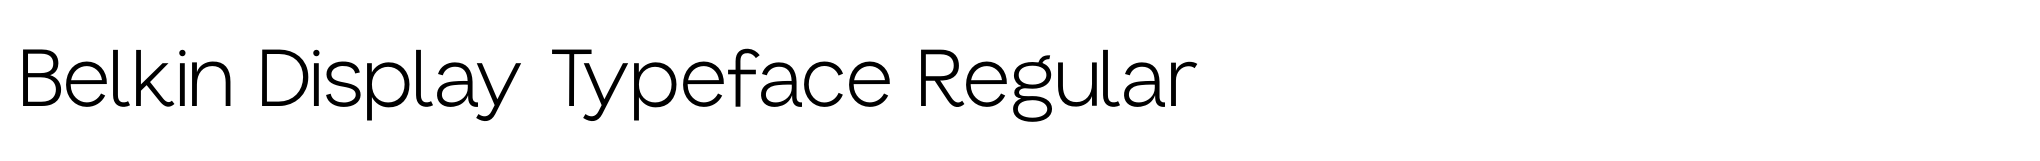 Belkin Display Typeface Regular image